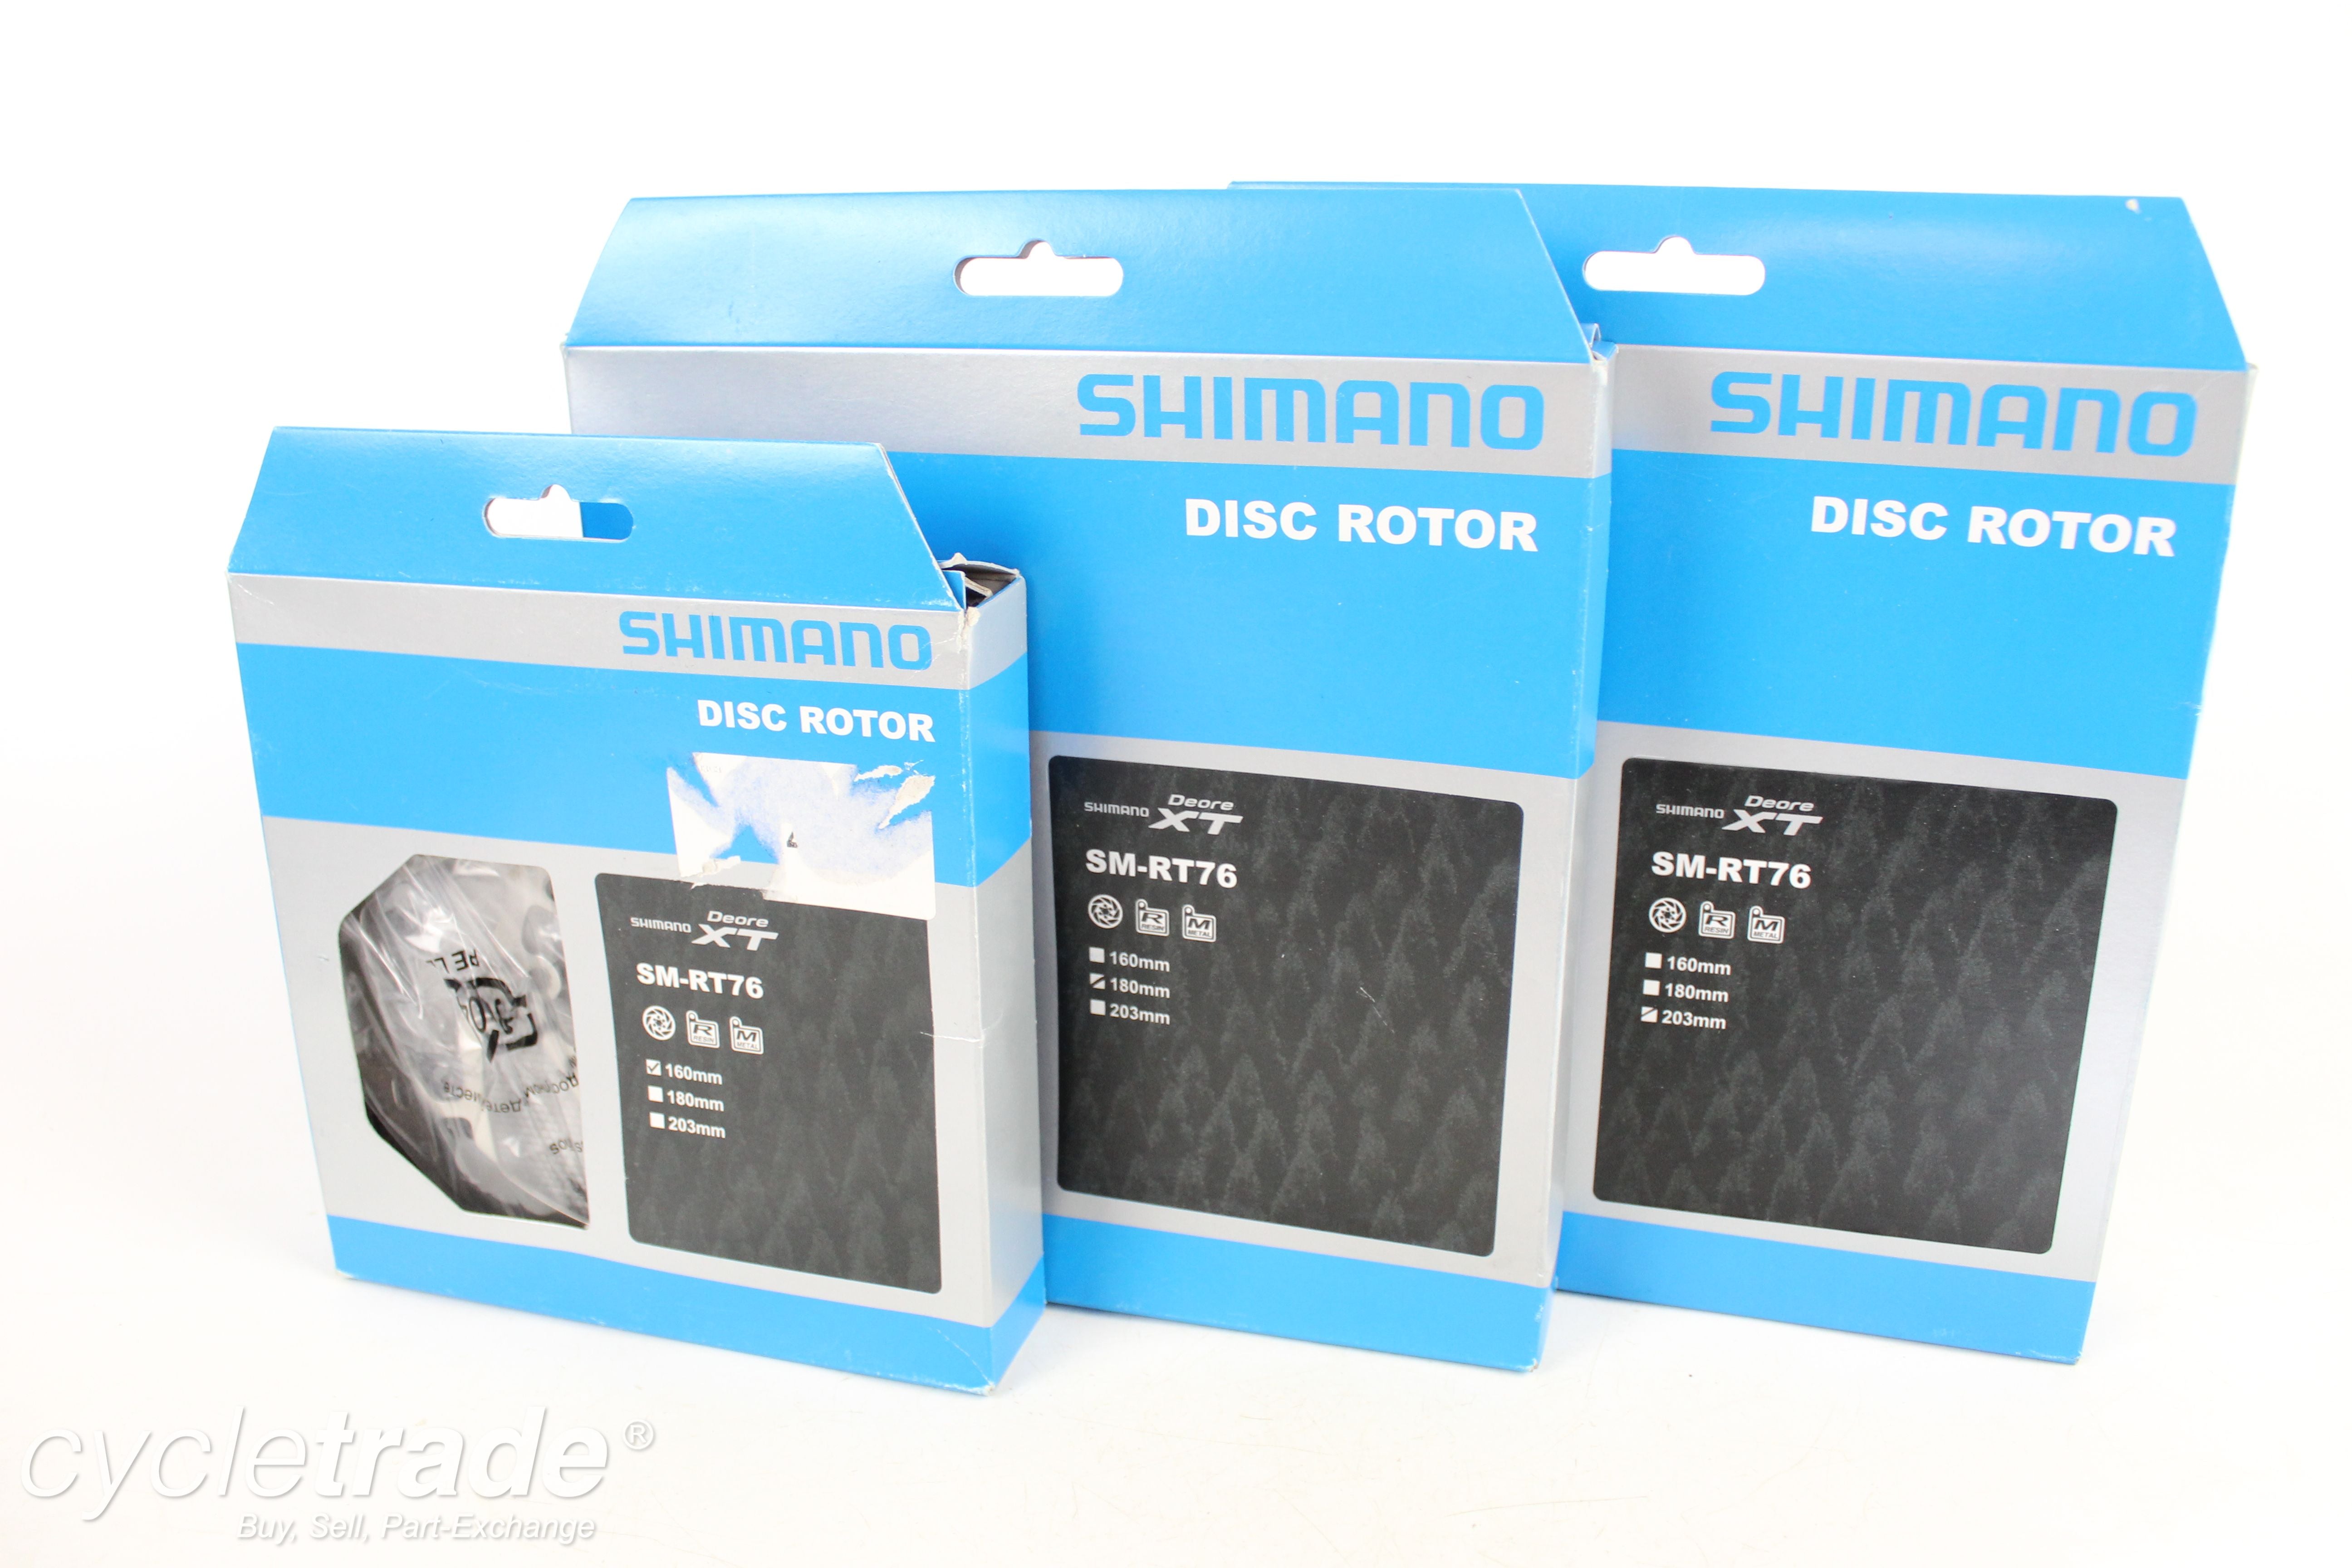 Disc Rotor - Shimano Deore XT, SM-RT76, (203)/(180)/(160mm) - Grade A+ (New)